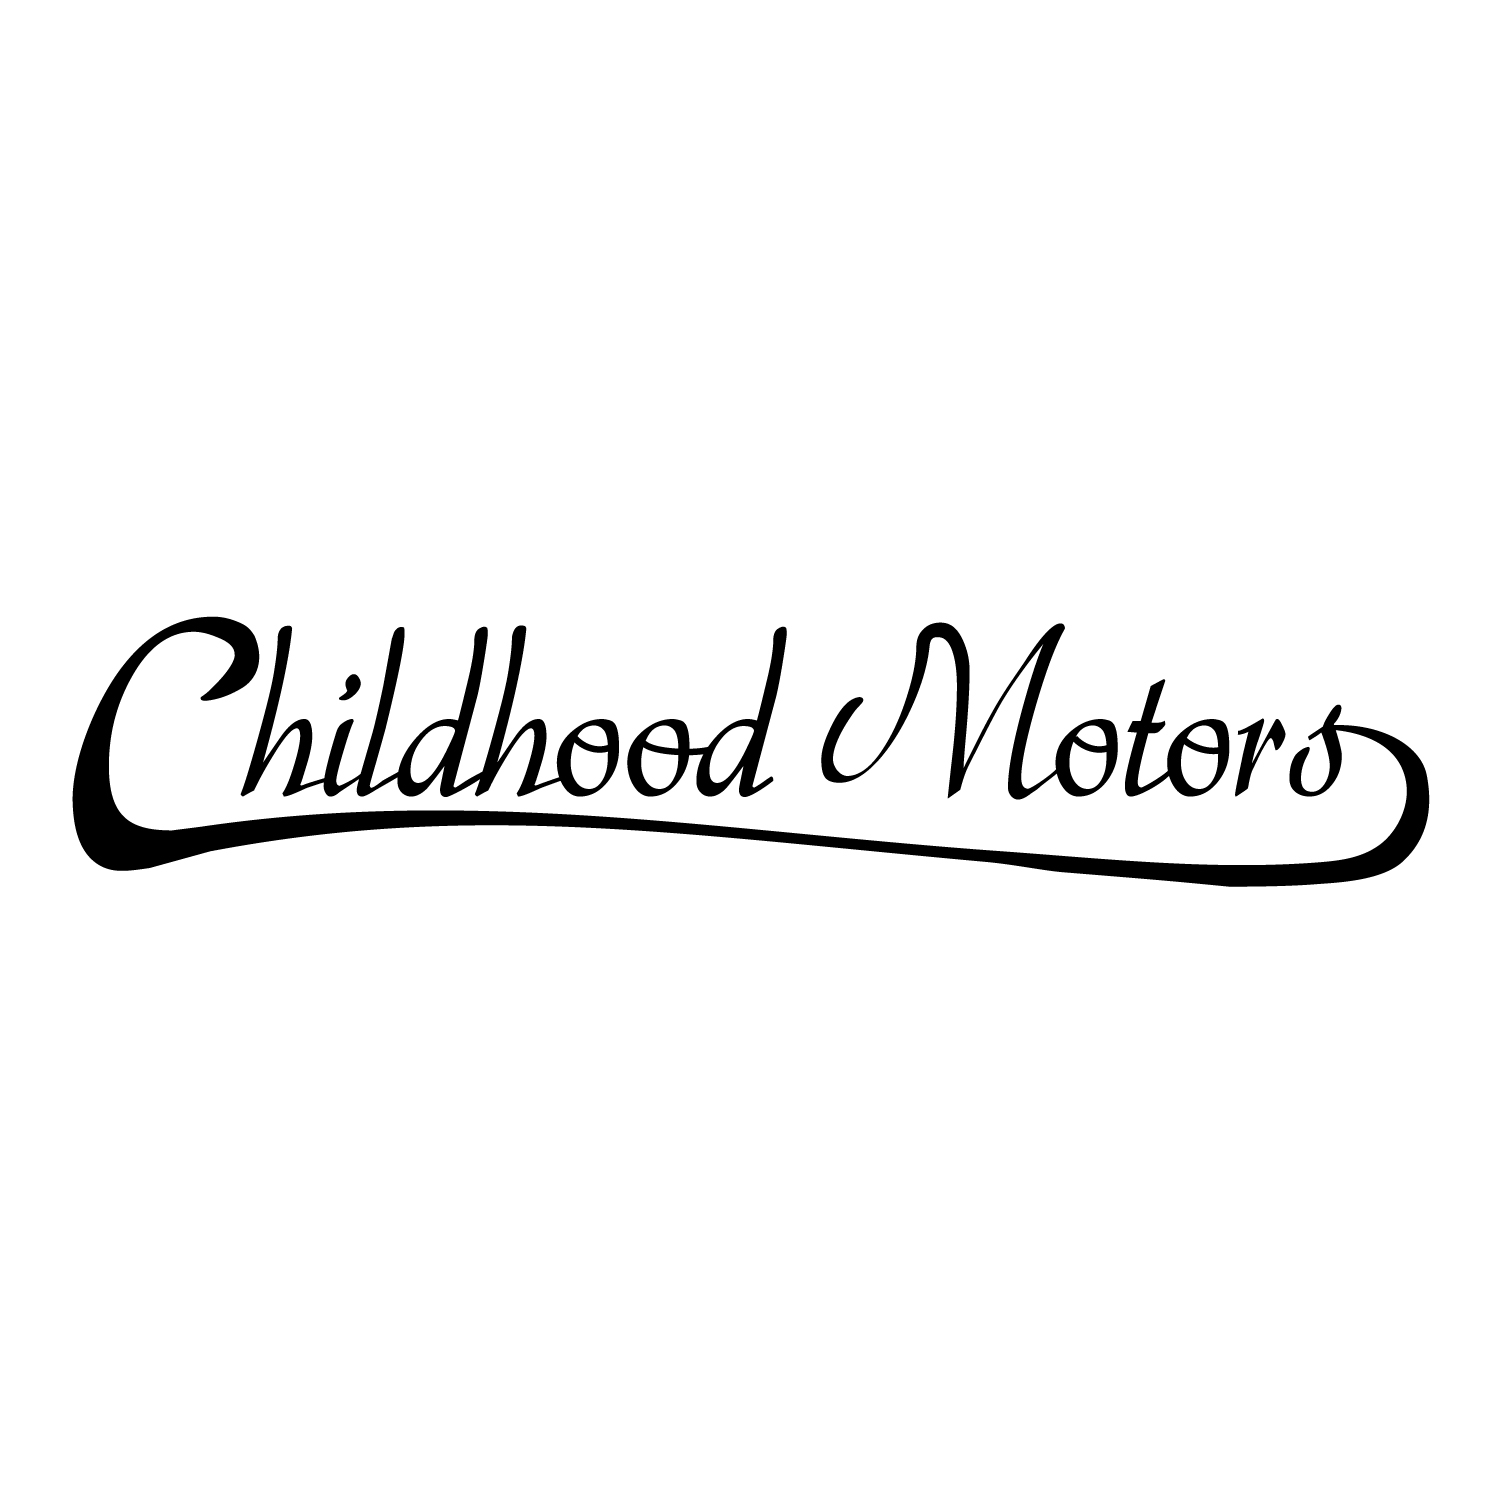 Childhood Motors(2)